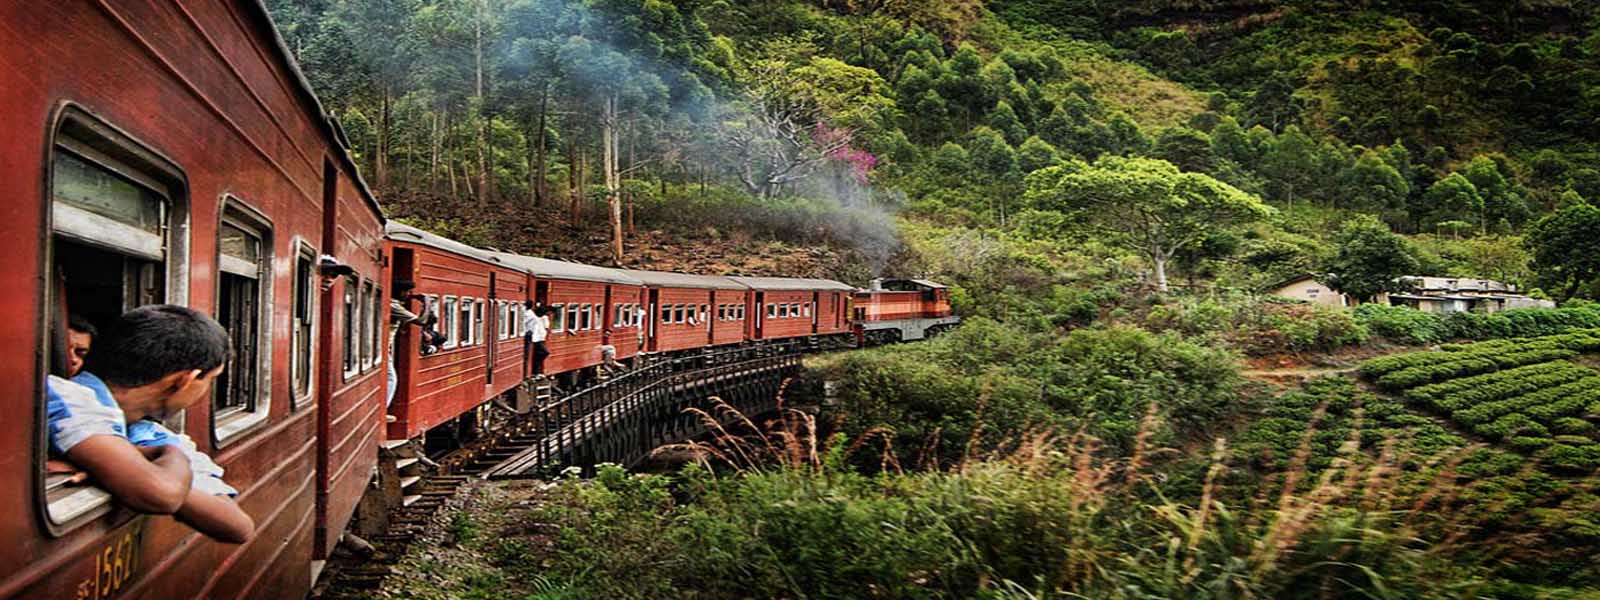 Steps taken to put Nanu Oya train back on track